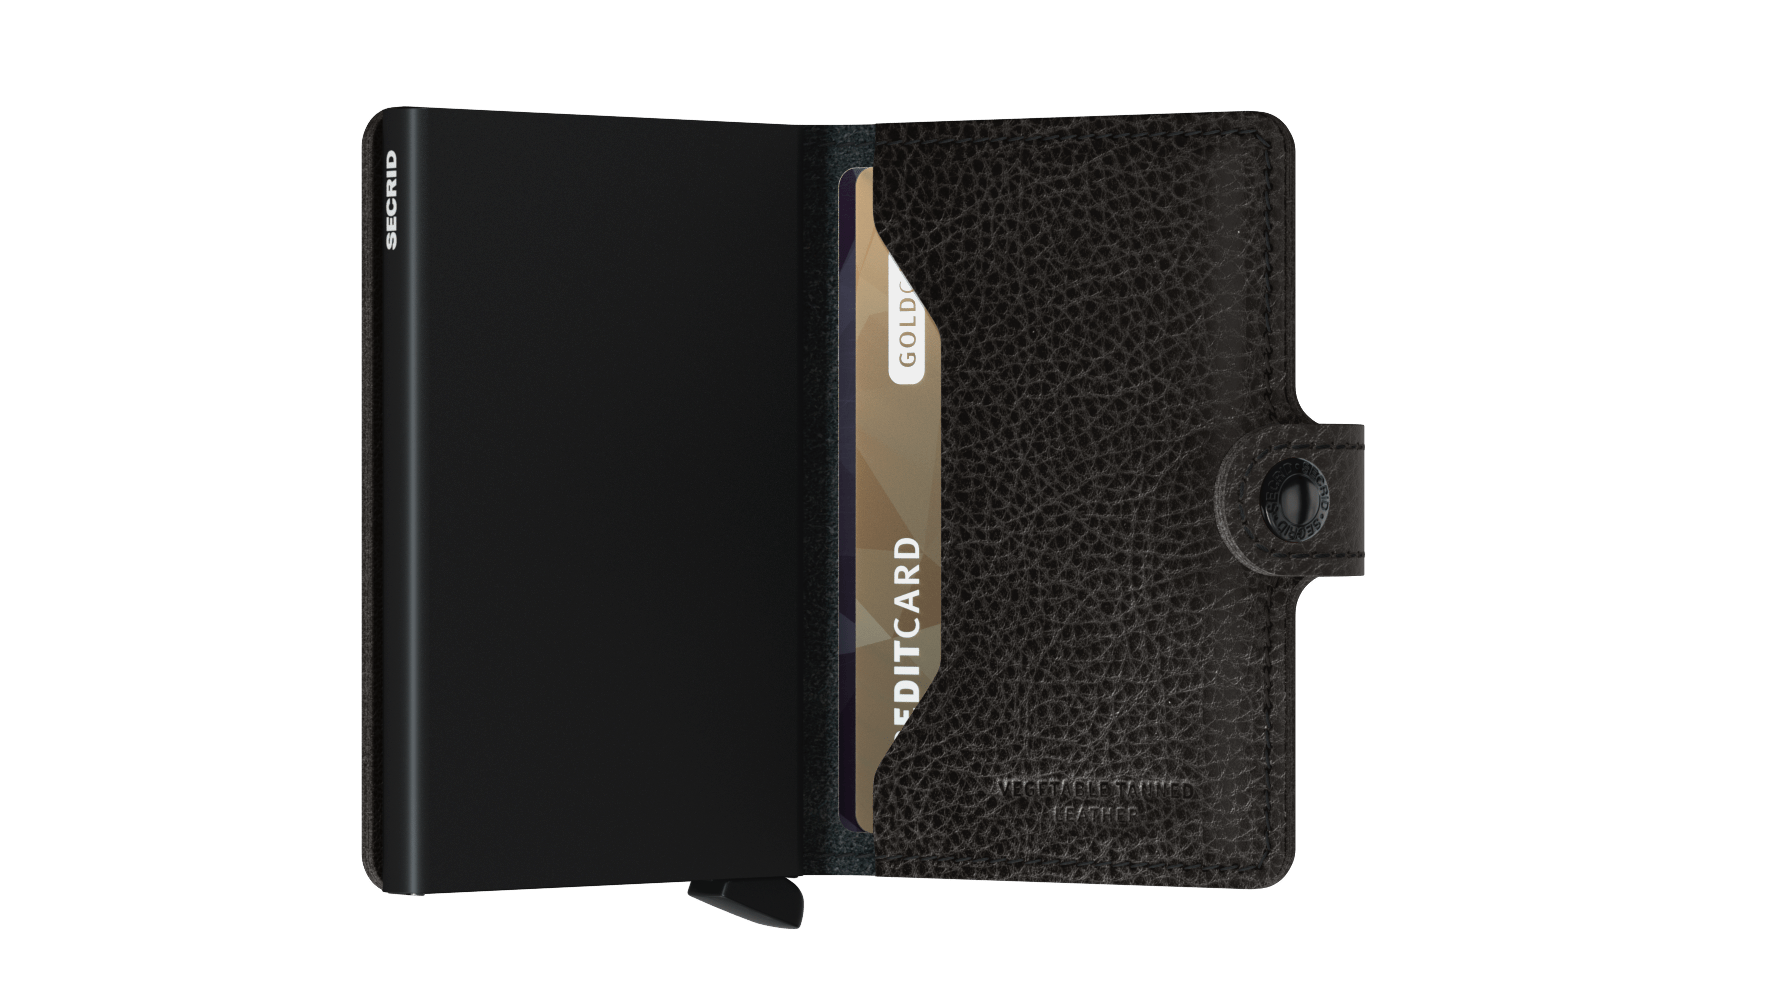 Secrid - Mini Wallet - Veg Tanned Black